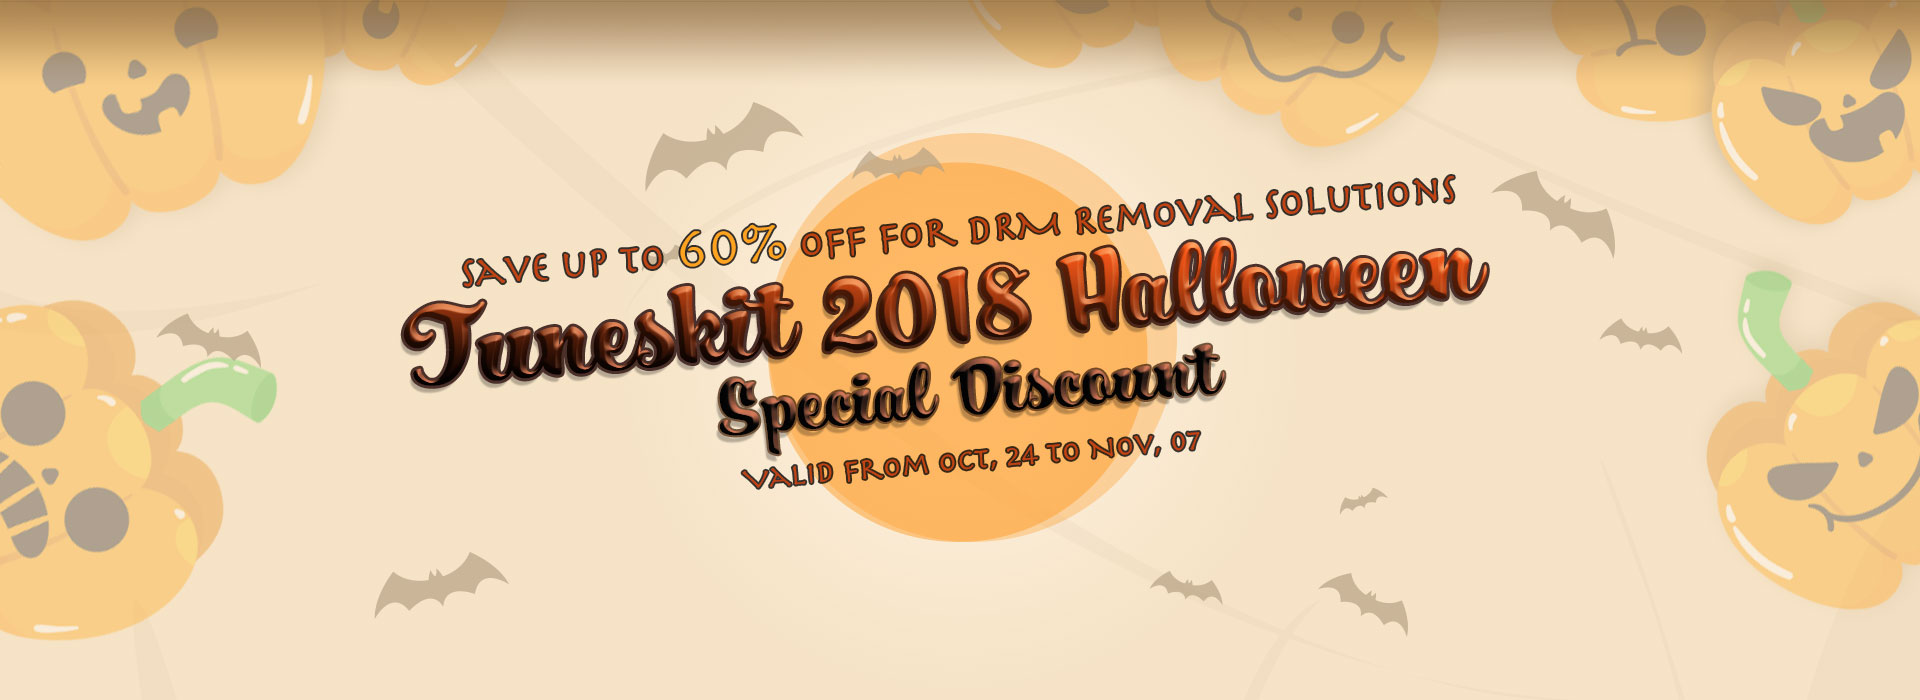 Tuneskit 2018 Halloween Special Discount